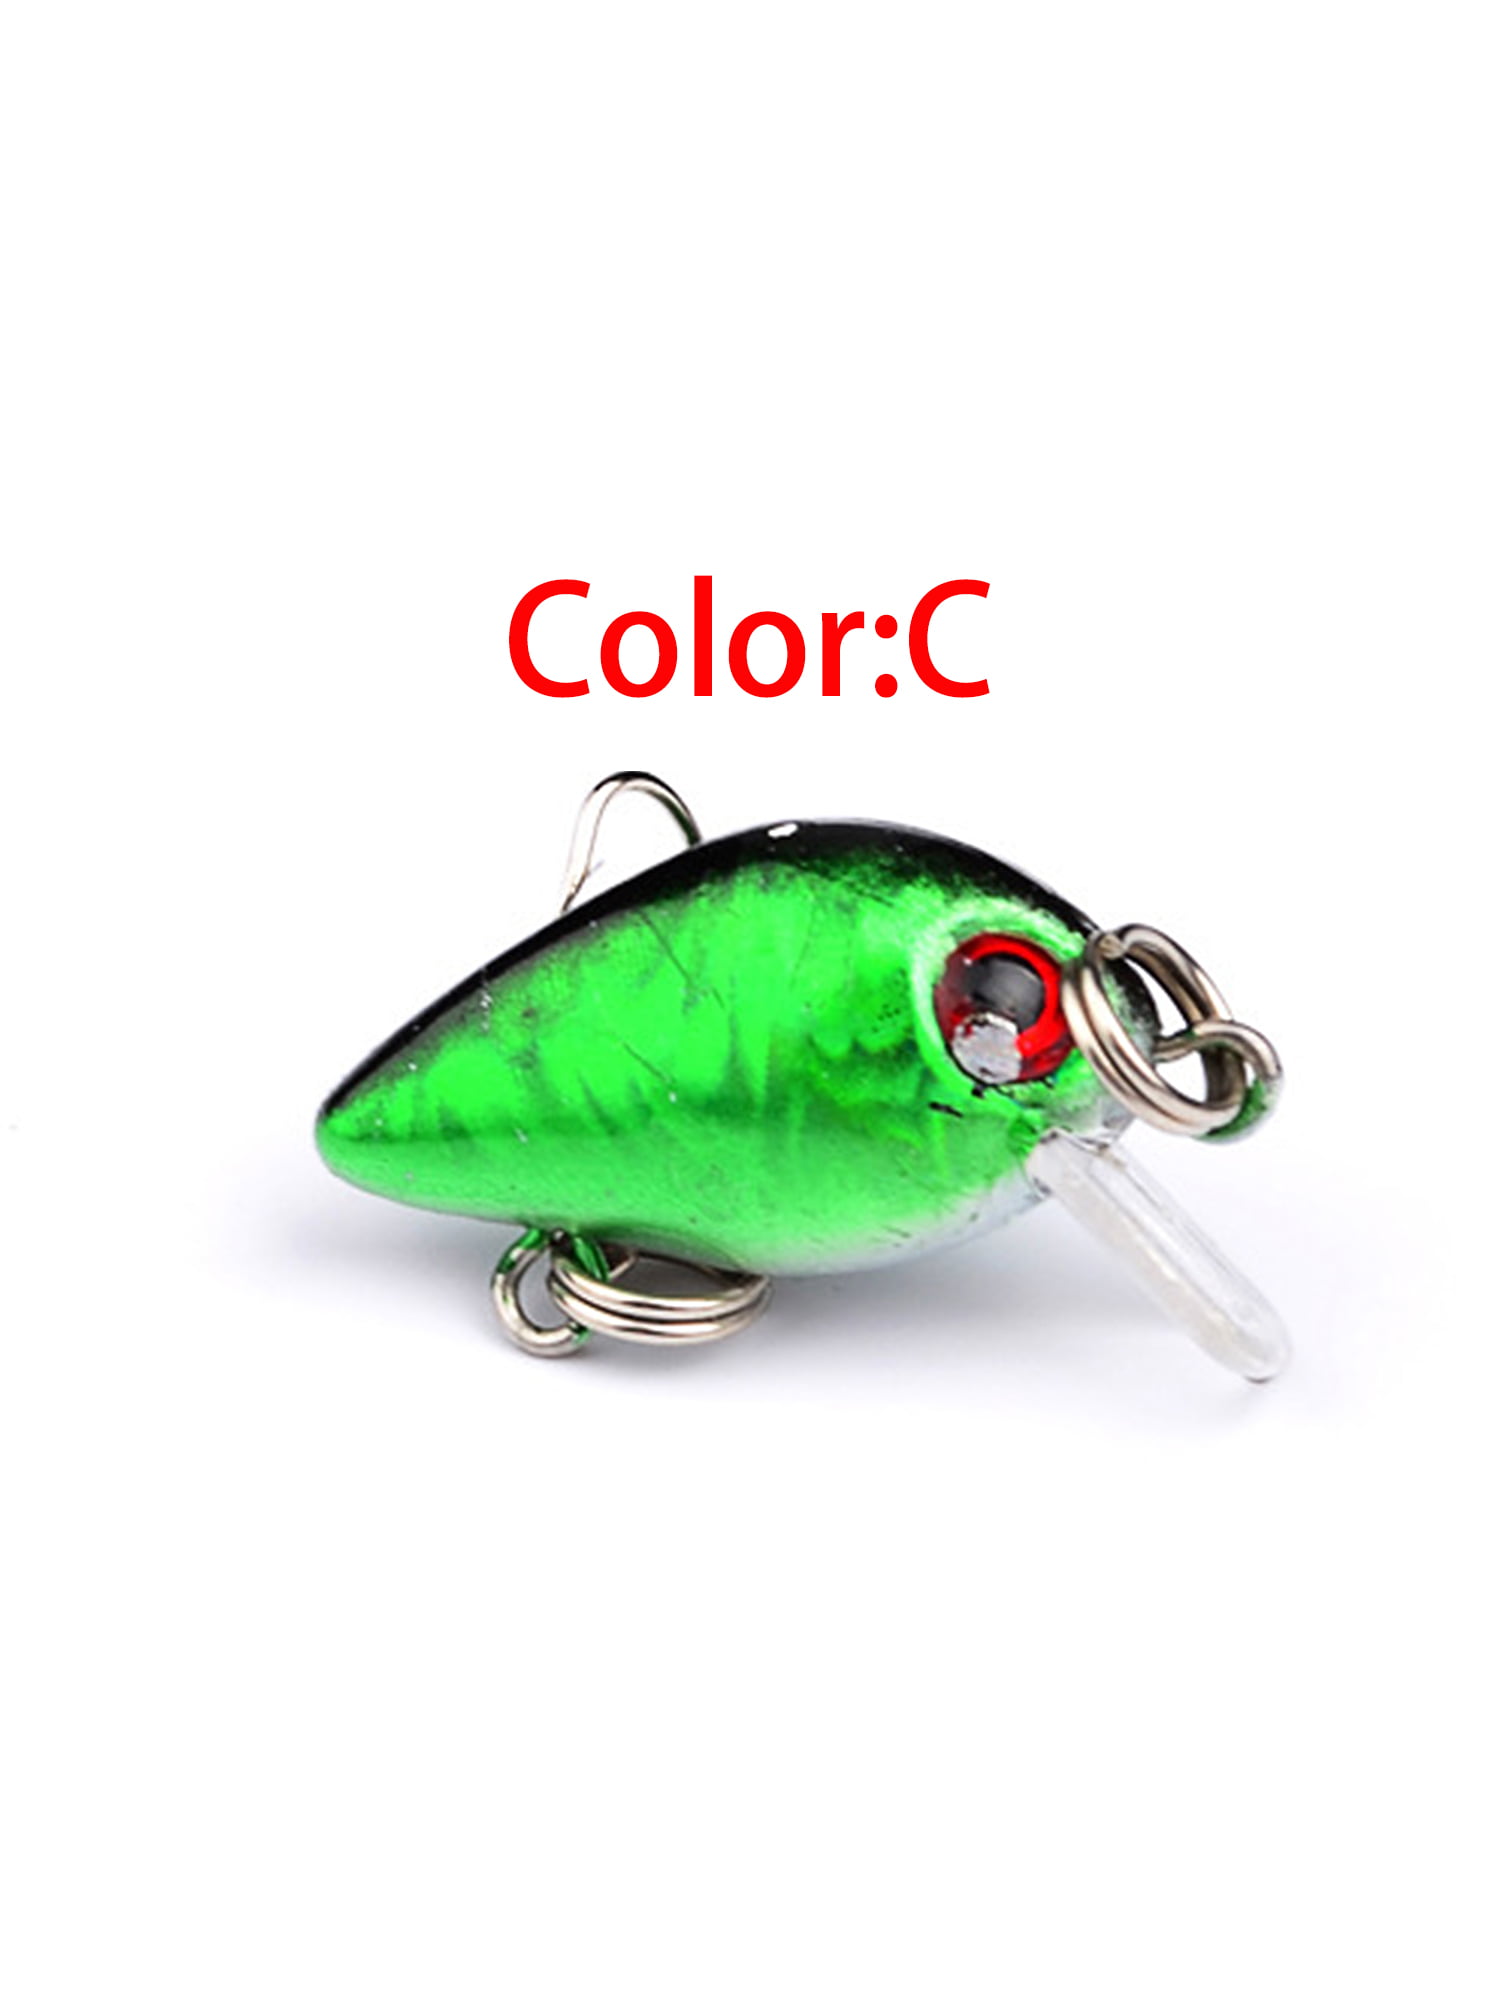 Details about  / Fishing Lures Mini Minnow Fish Tackle 2Hooks Bait Crankbait Sports DIY Colorful